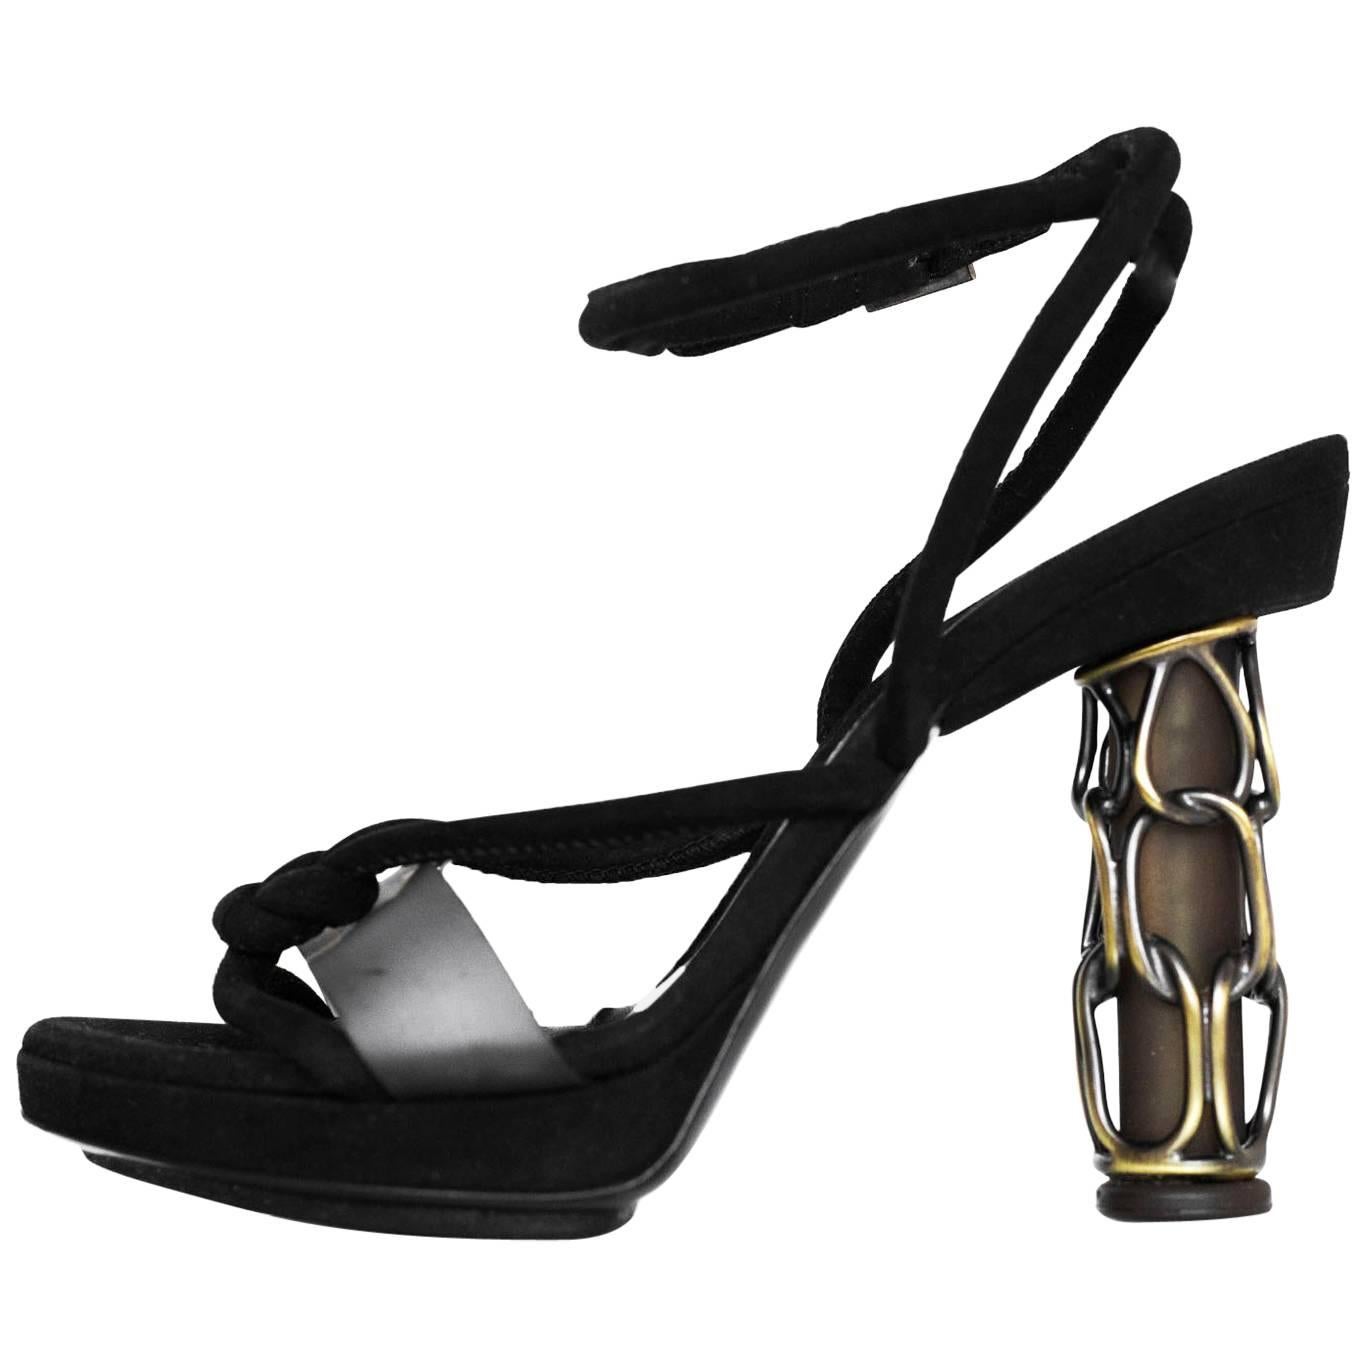 Fendi Black Suede Sandals with Caged Heels Sz 38